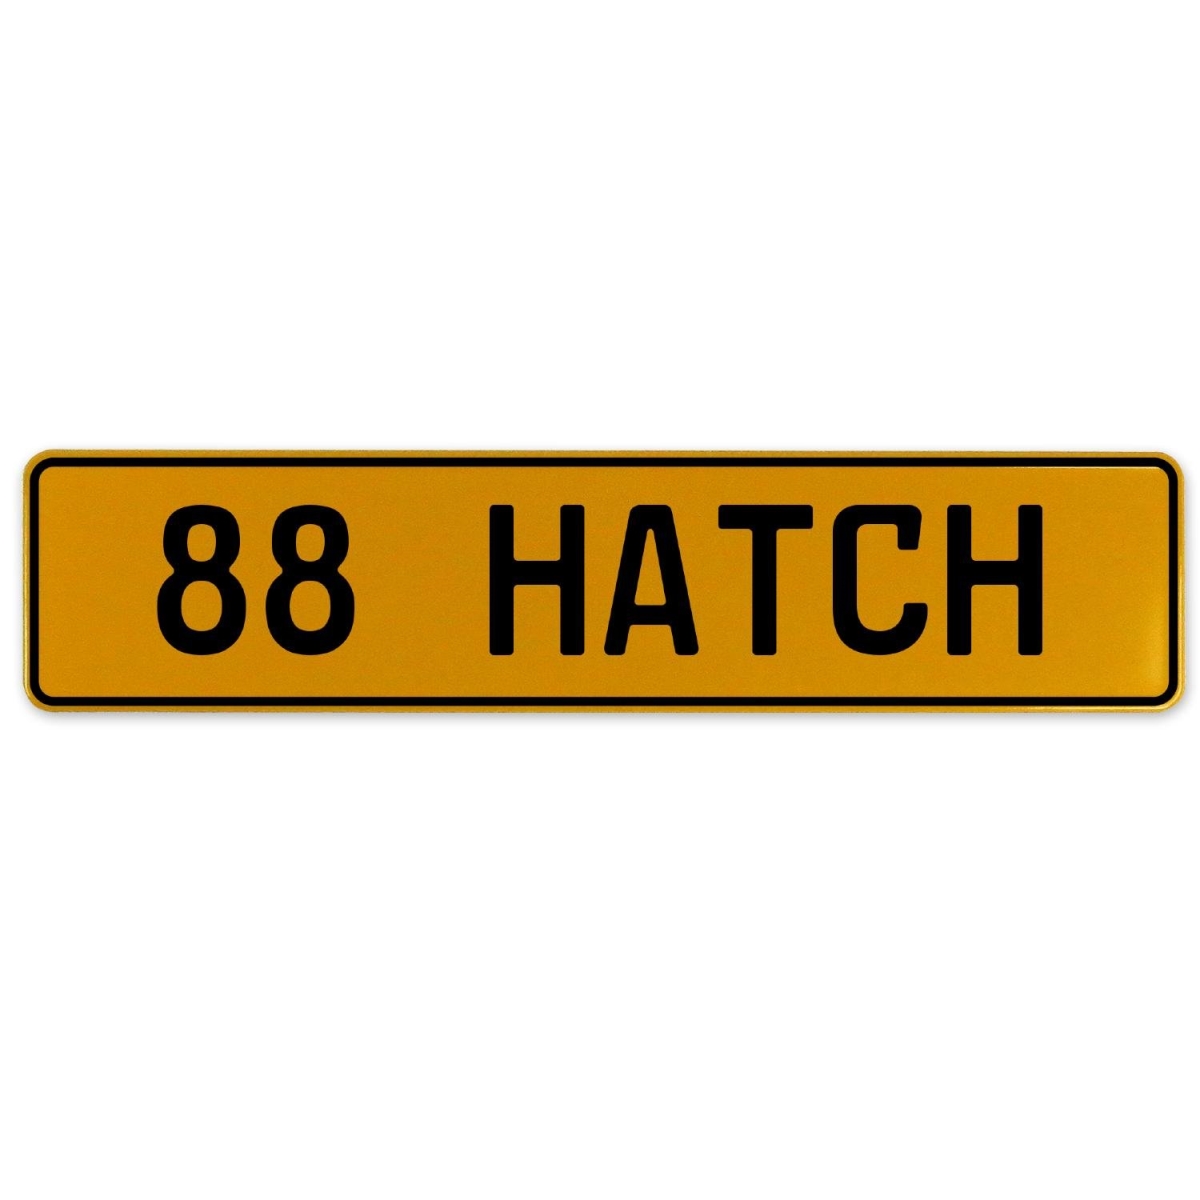 88 Hatch - Yellow Aluminum Street Sign Mancave Euro Plate Name Door Sign Wall